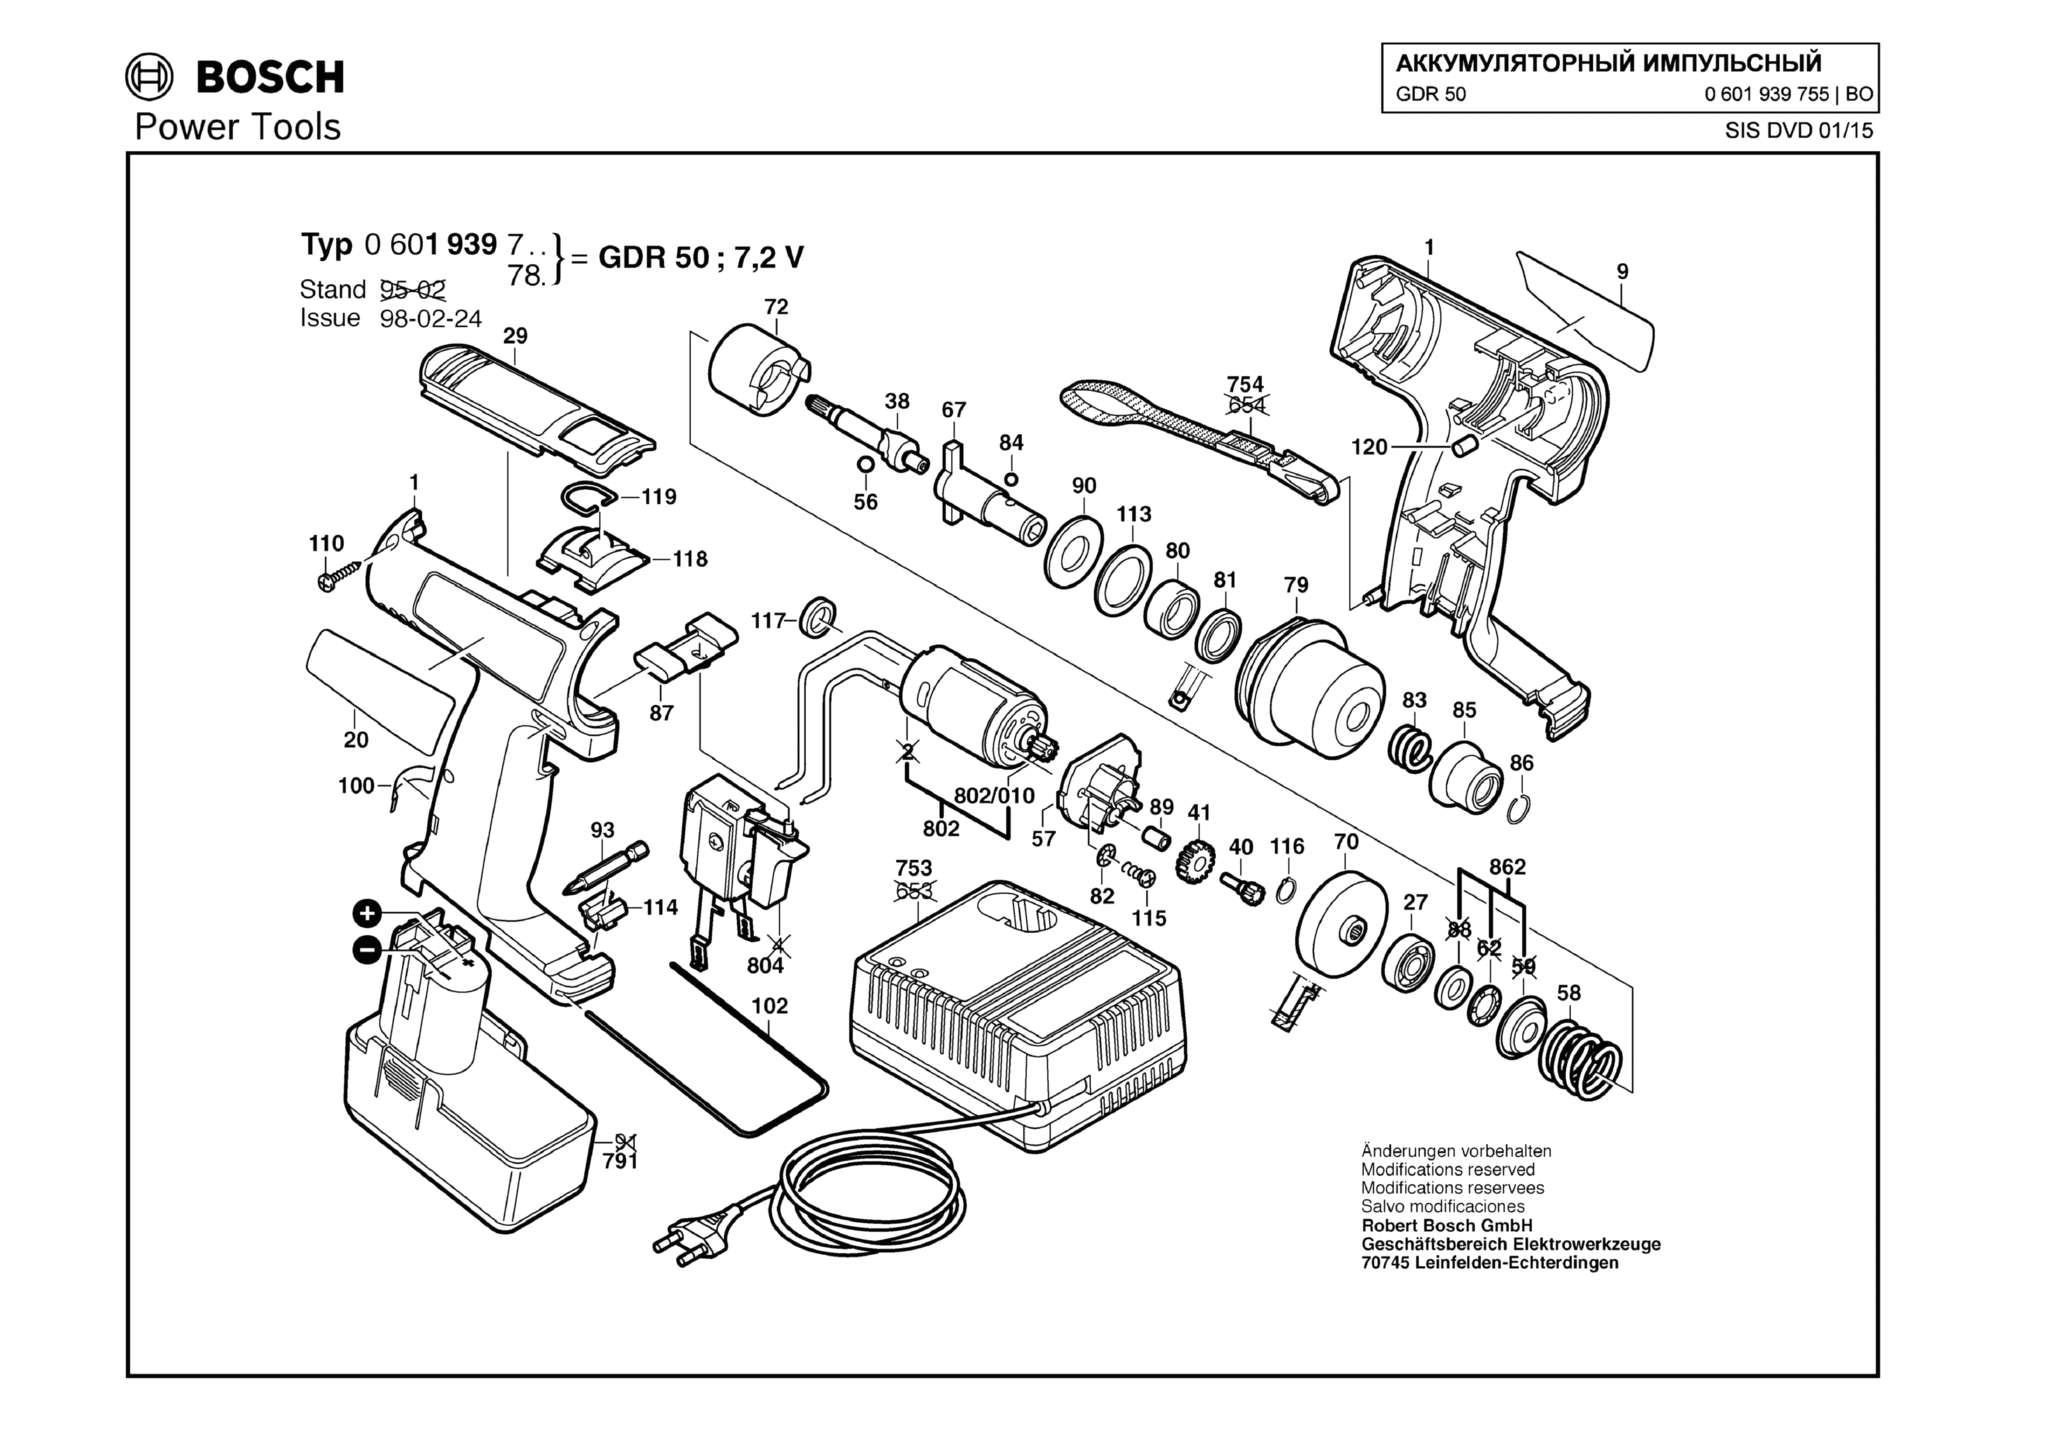 Запчасти, схема и деталировка Bosch GDR 50 (ТИП 0601939755)